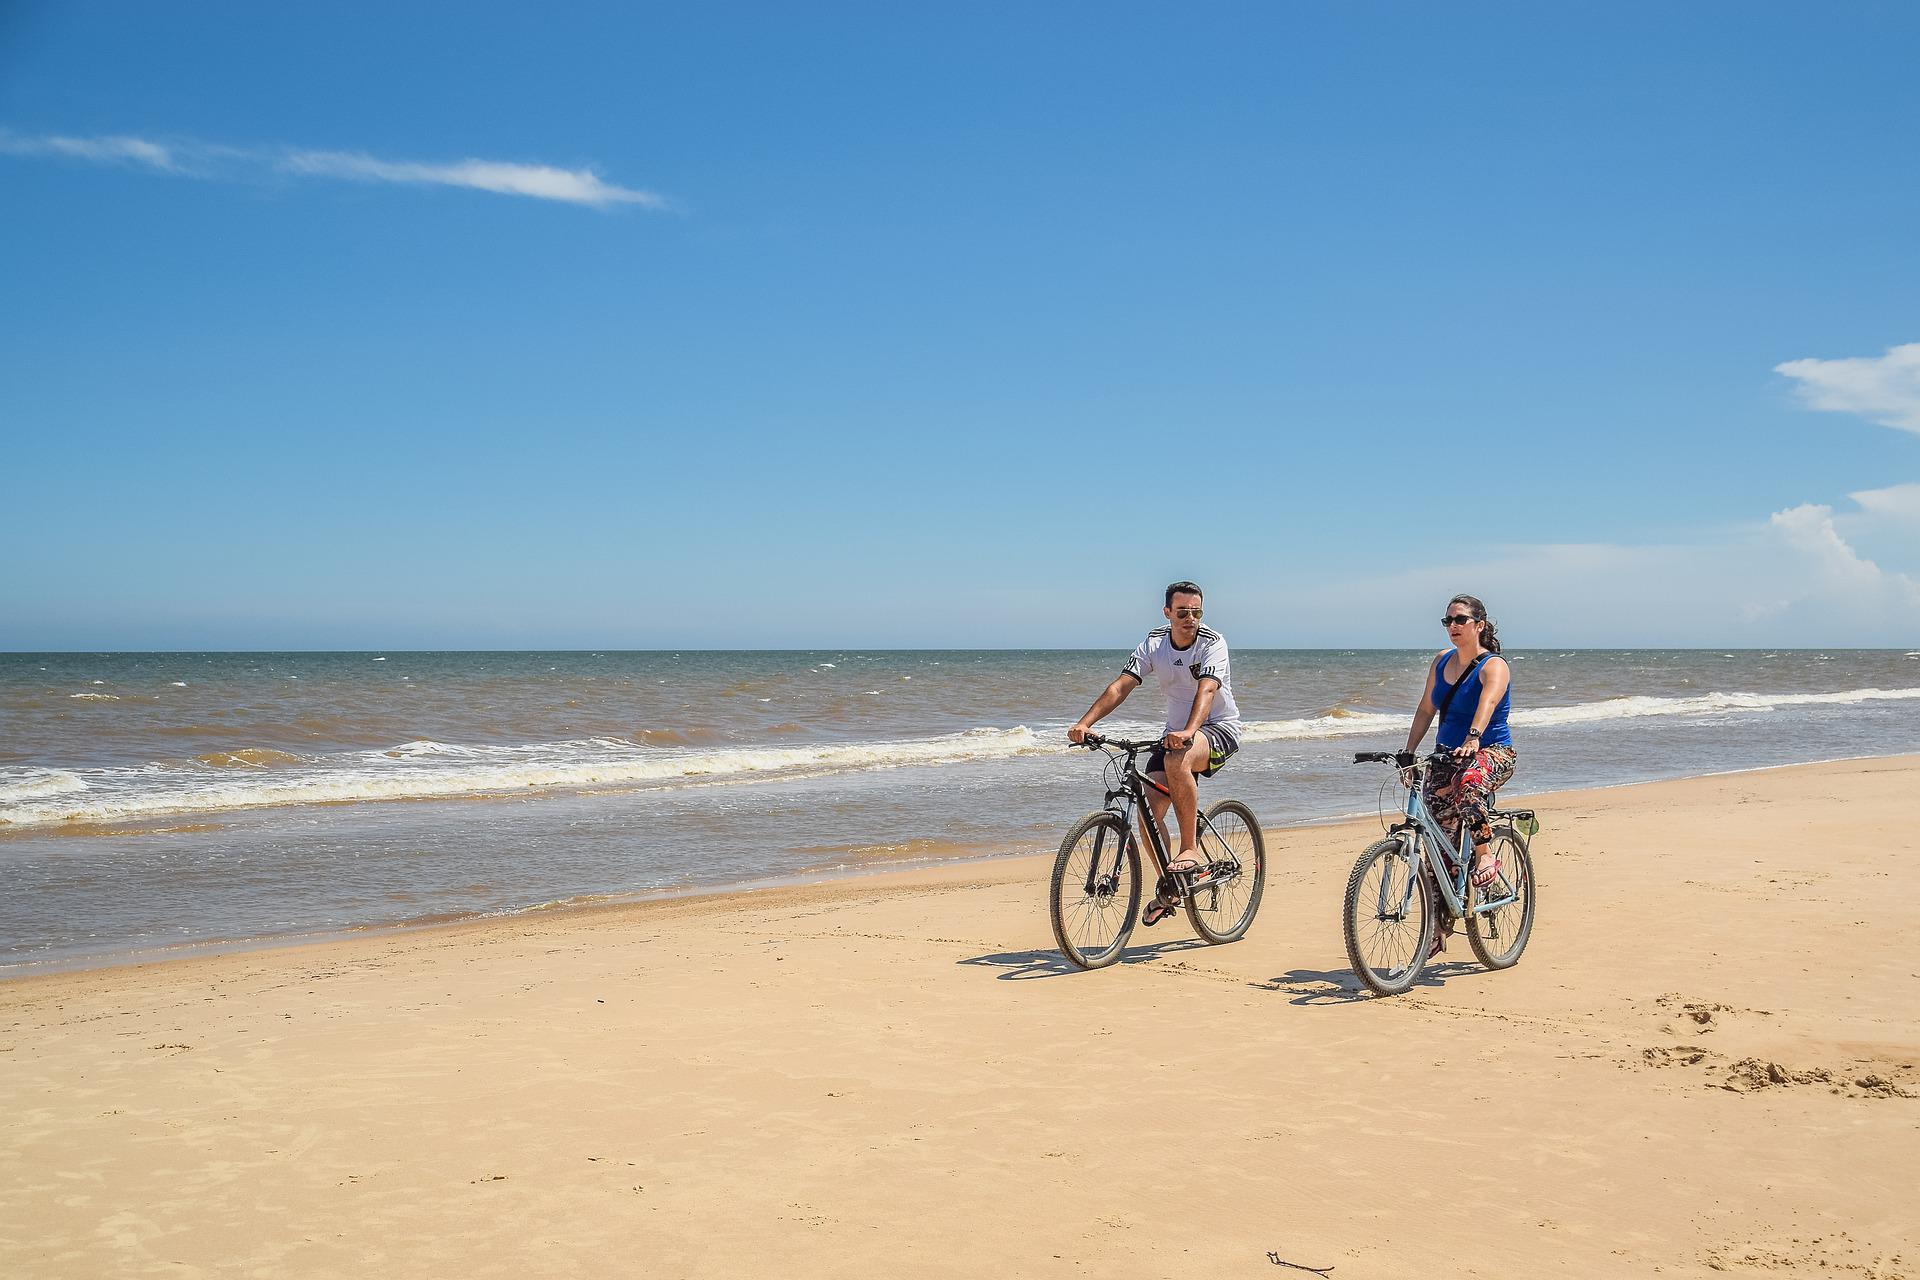 A couple exploring a bike trail on a beach.